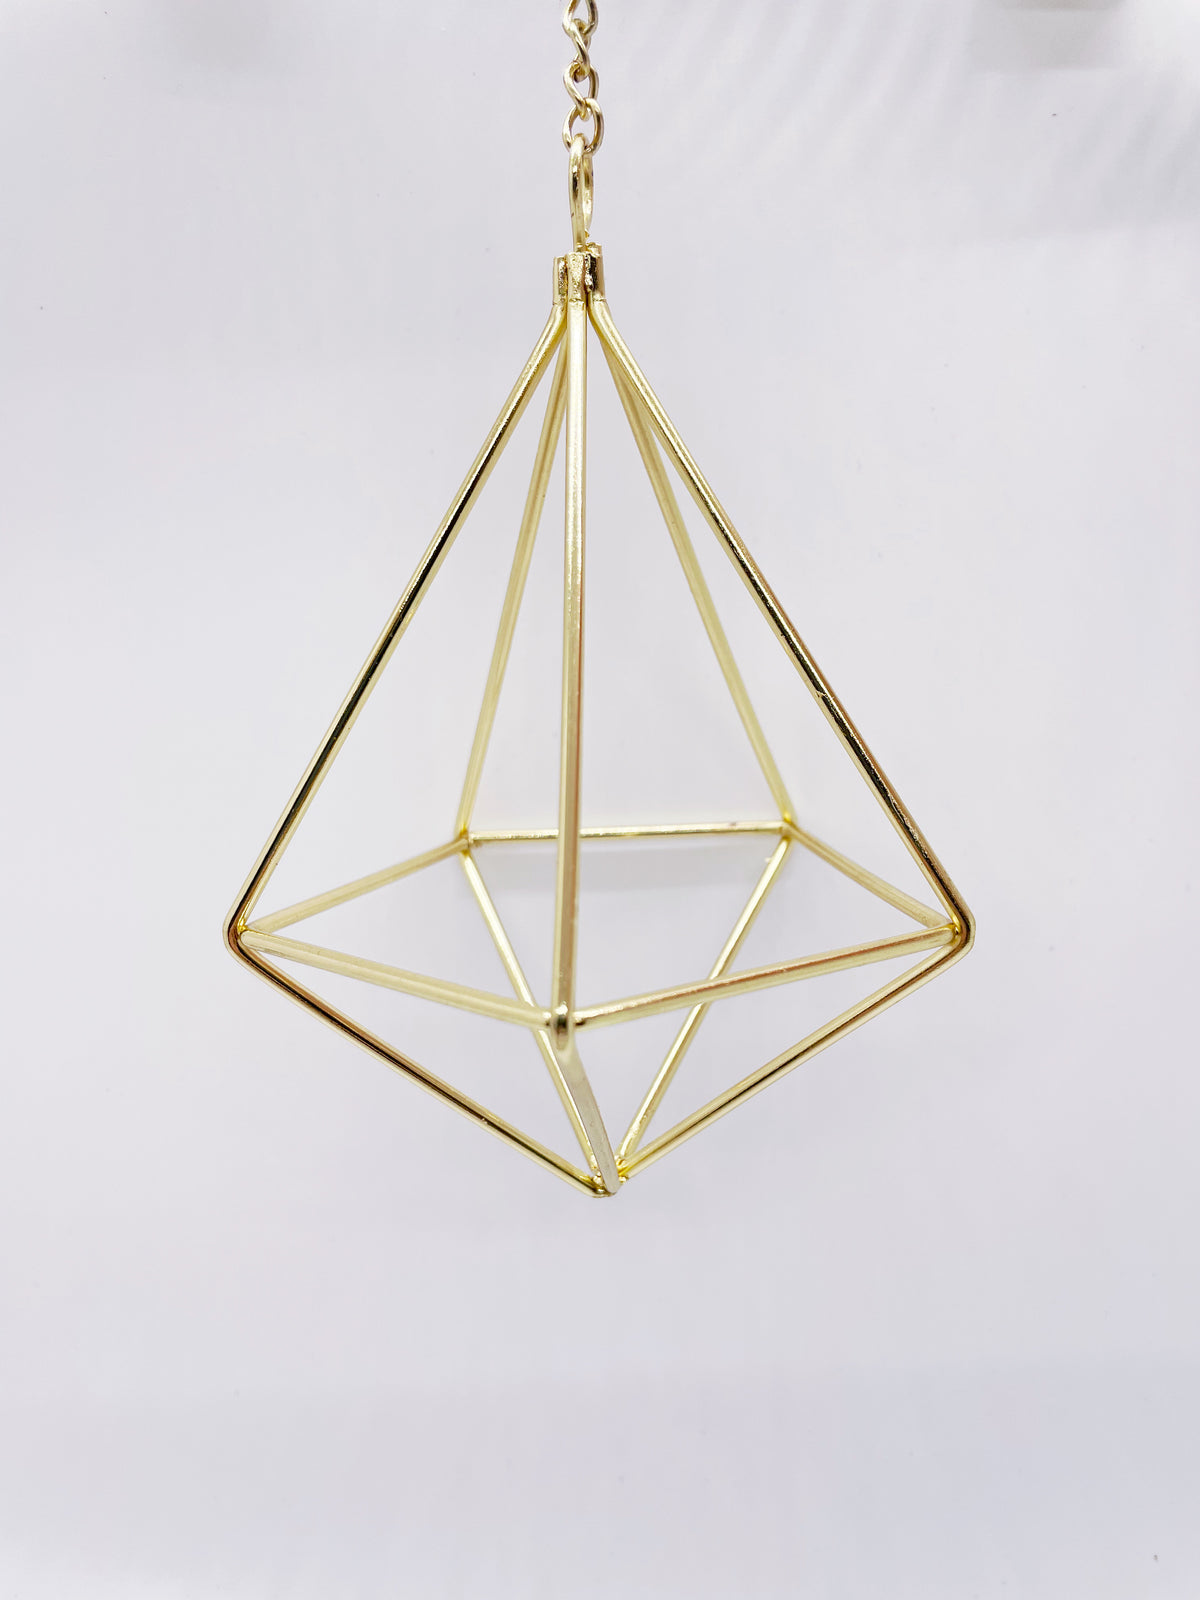 Gold geometric air plant hanger - Small